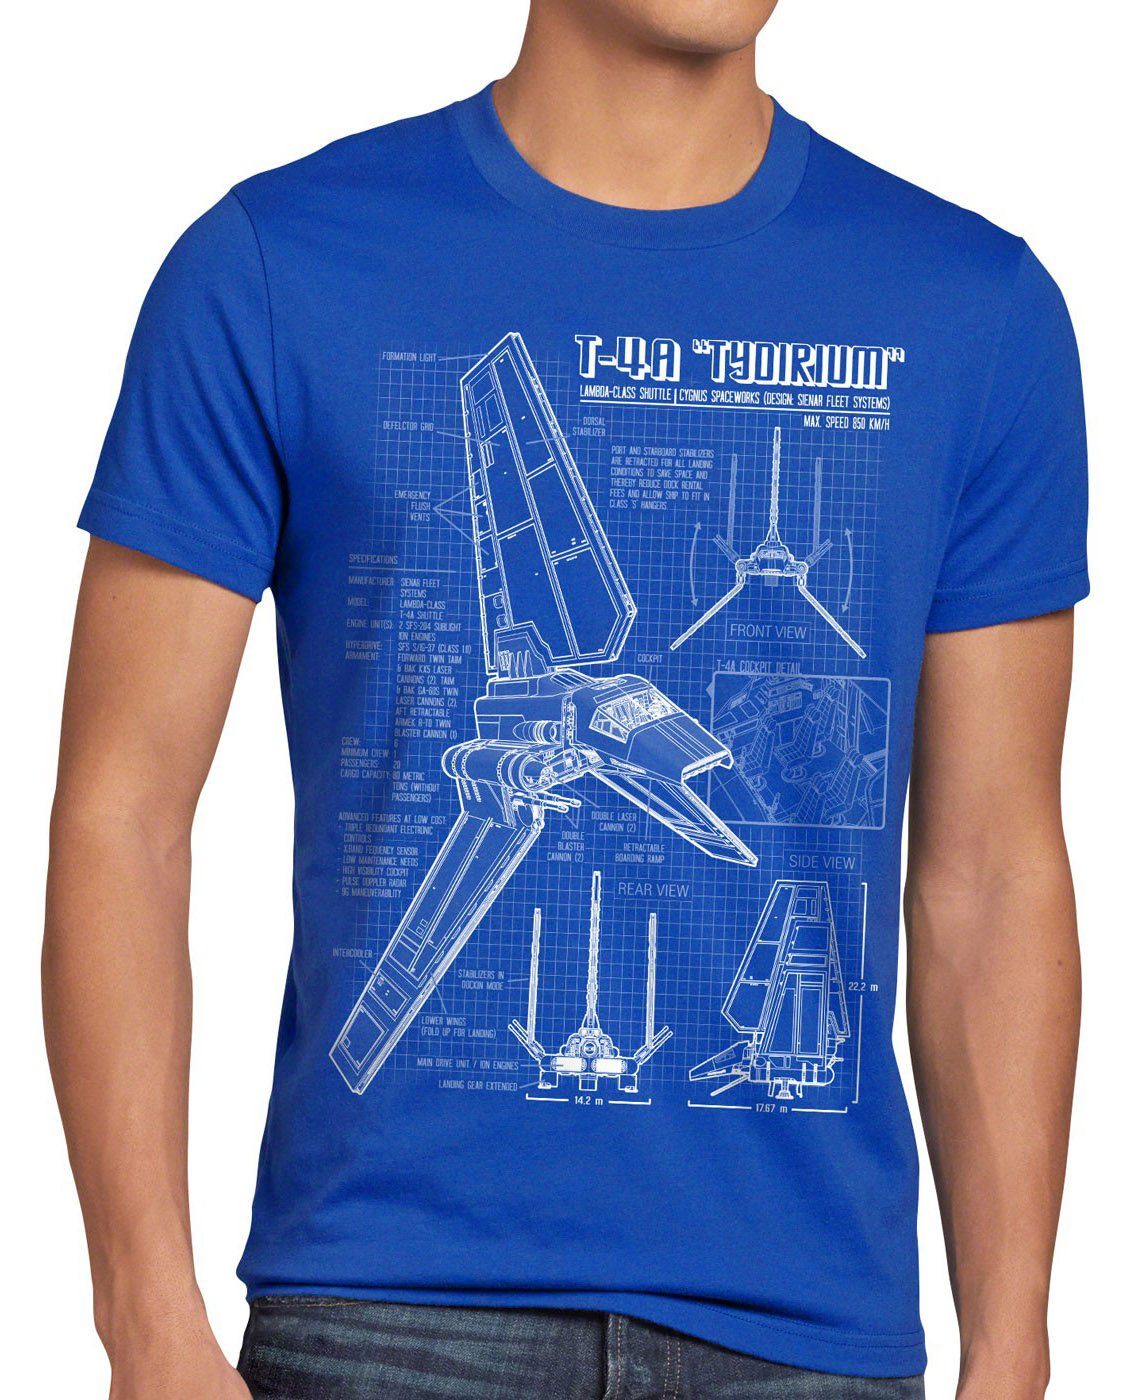 style3 Print-Shirt Herren T-Shirt Tydirium Lambda T-4A Shuttle blaupause raumfähre